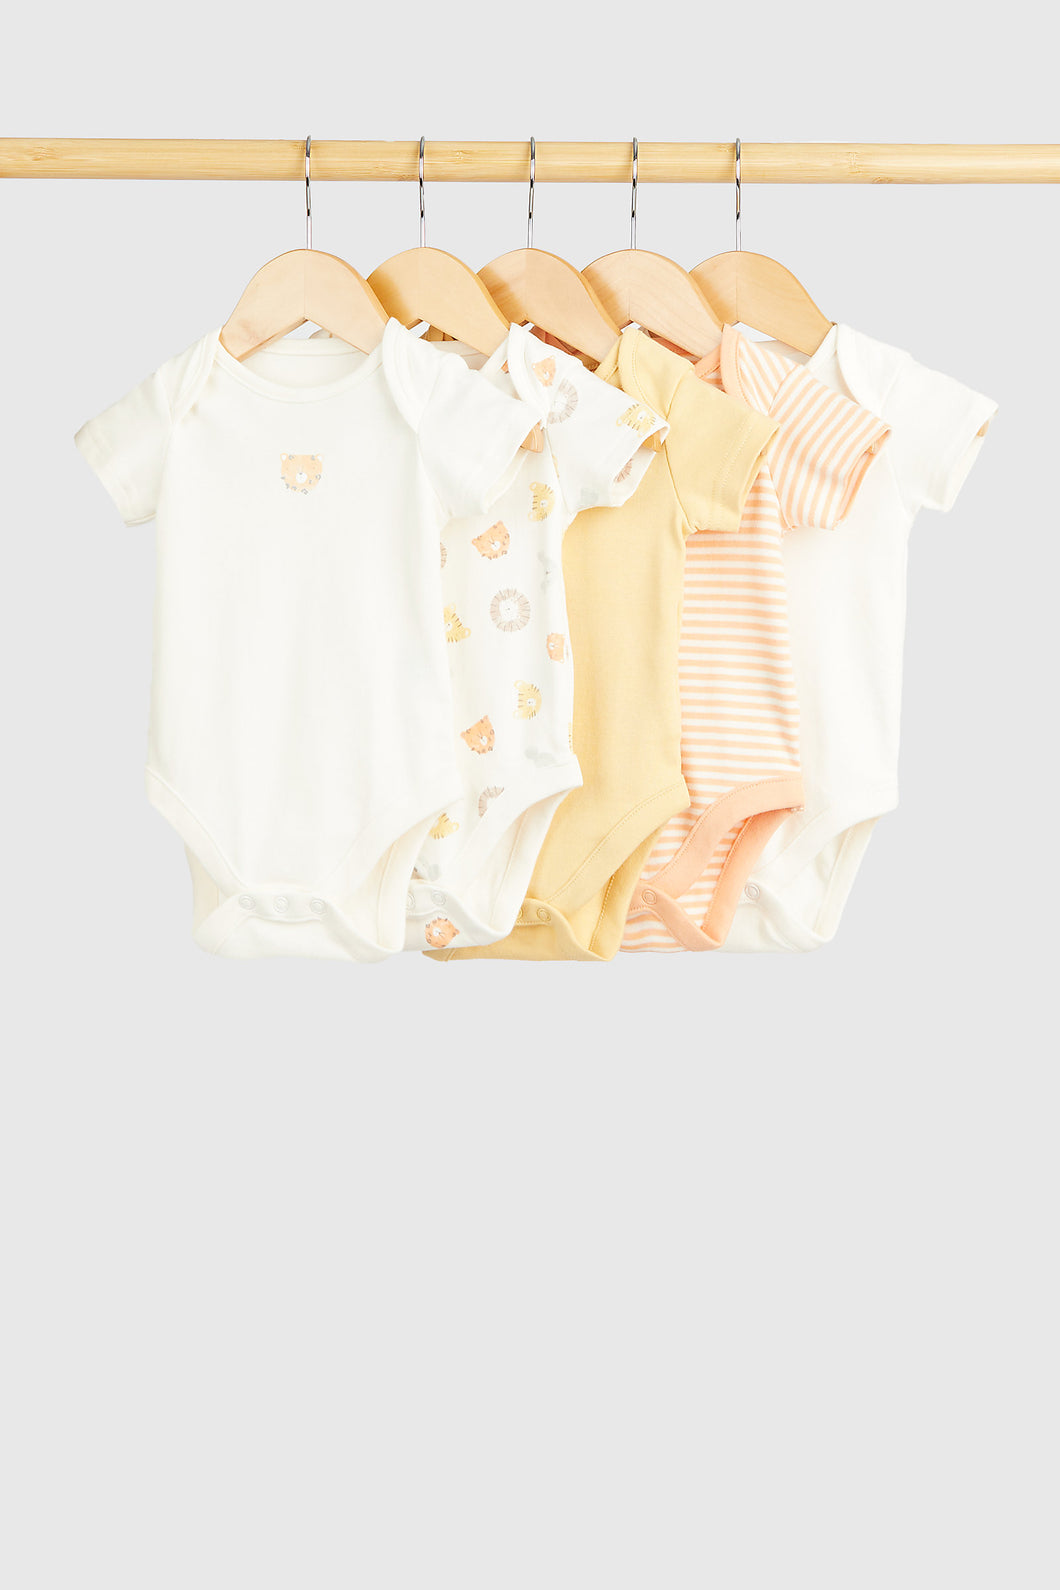 Mothercare Safari Short-Sleeved Bodysuits - 5 Pack